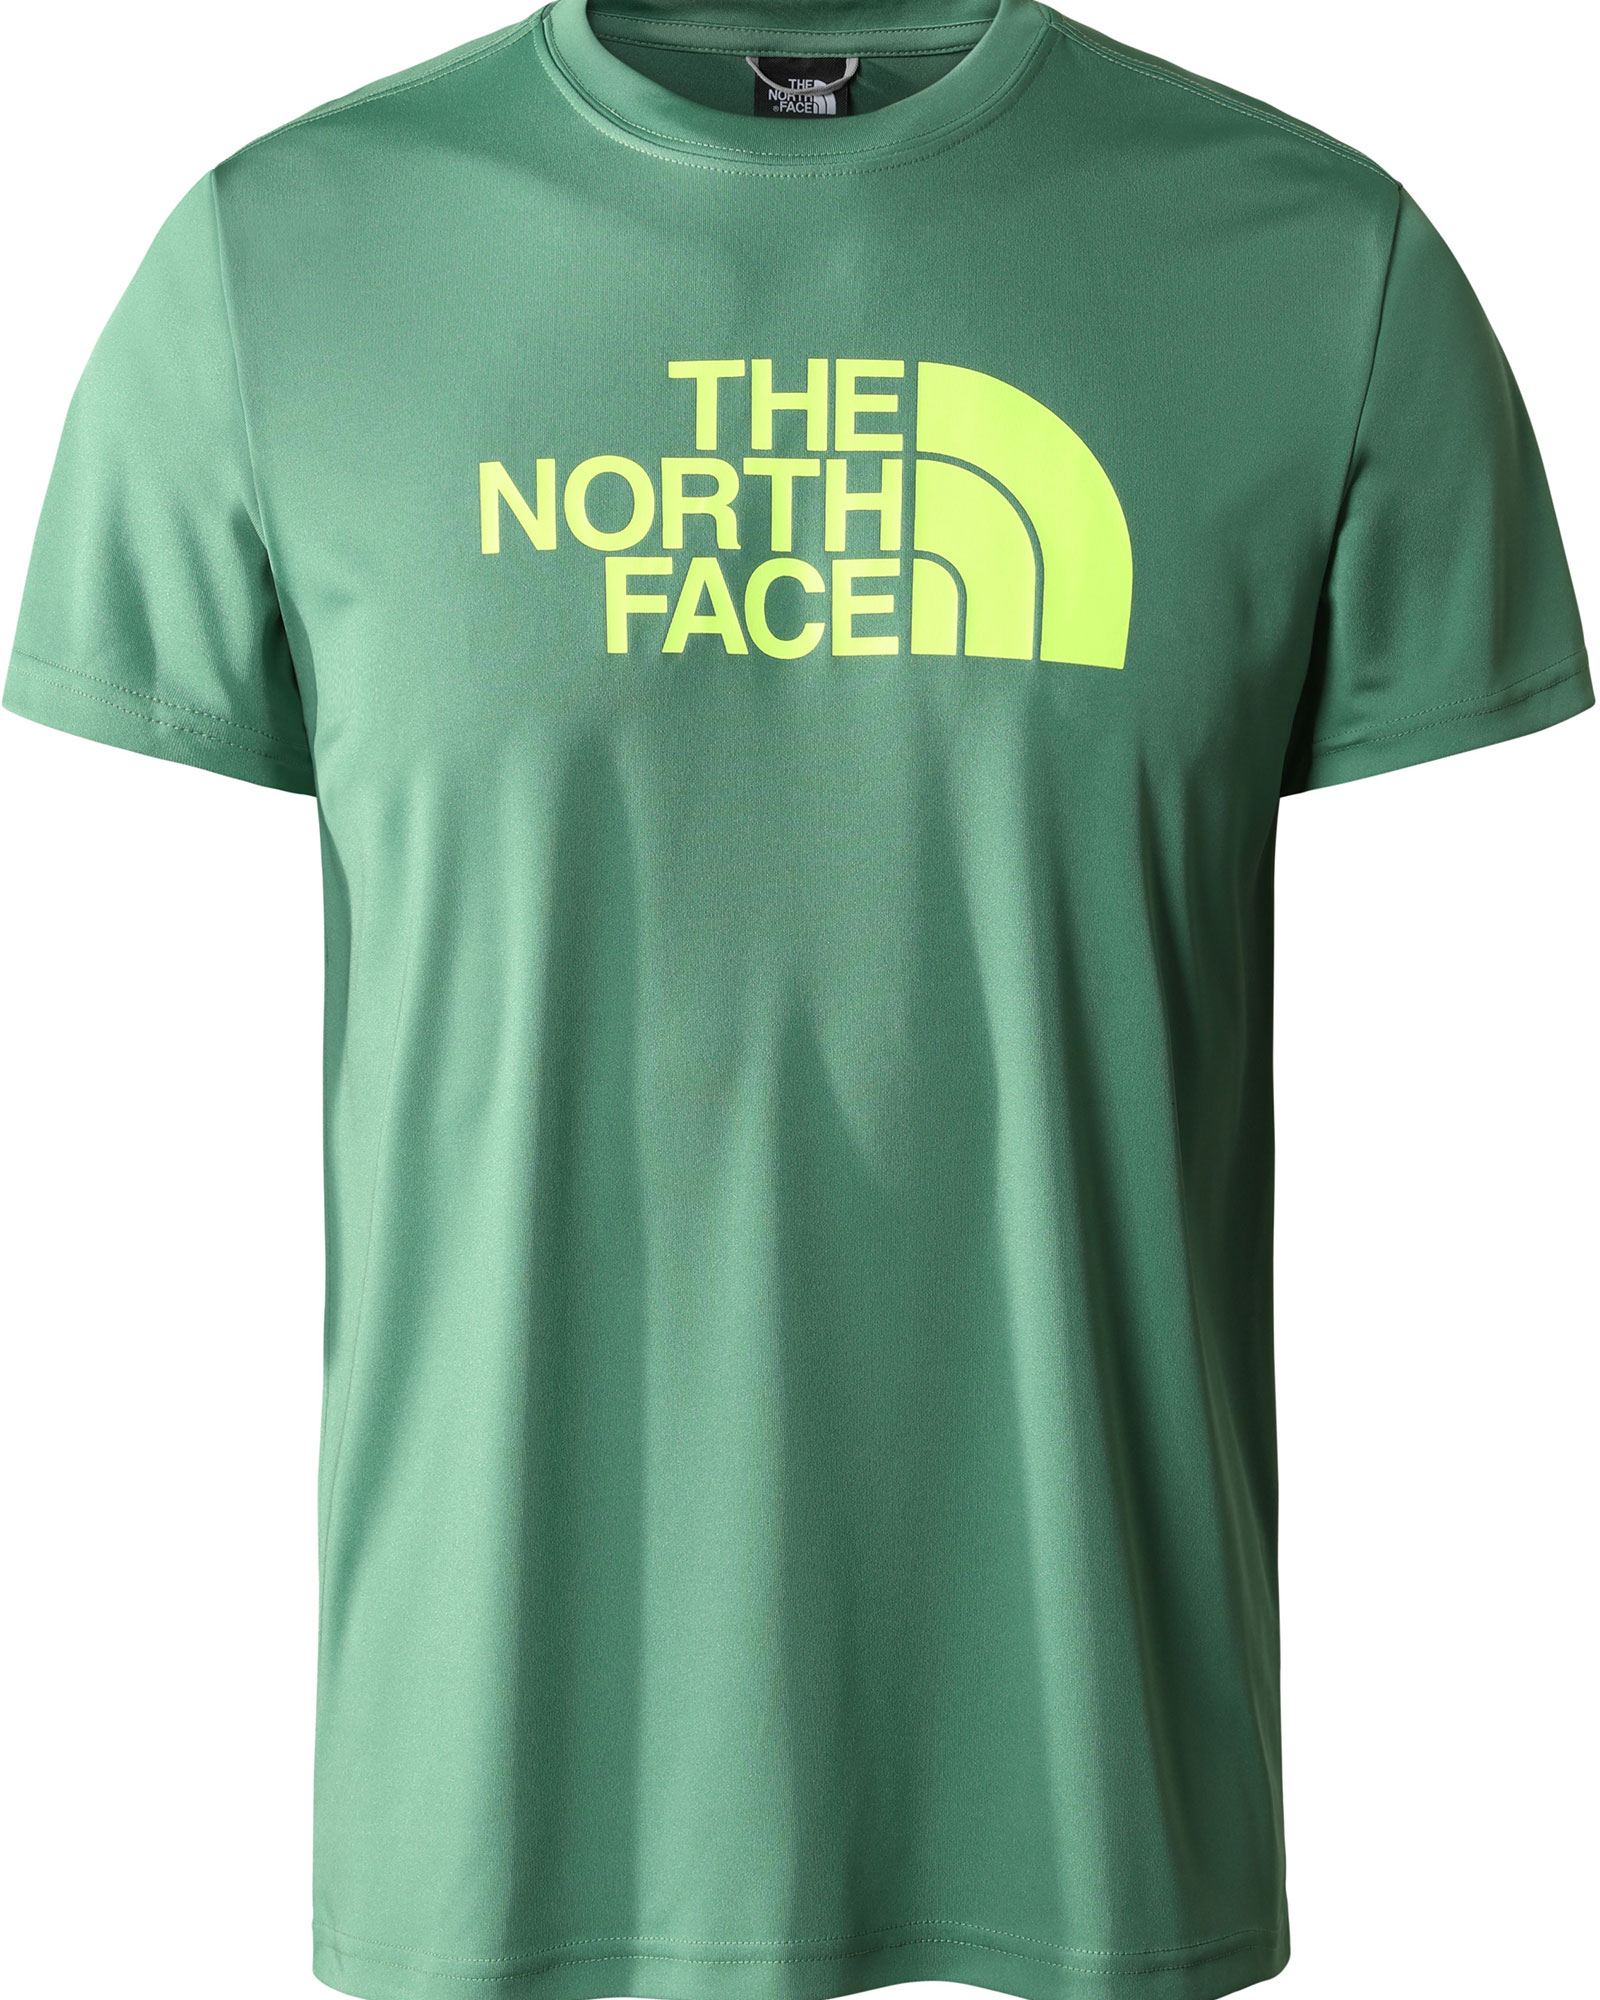 The North Face Reaxion Easy Men’s T Shirt - Deep Grass Green XL